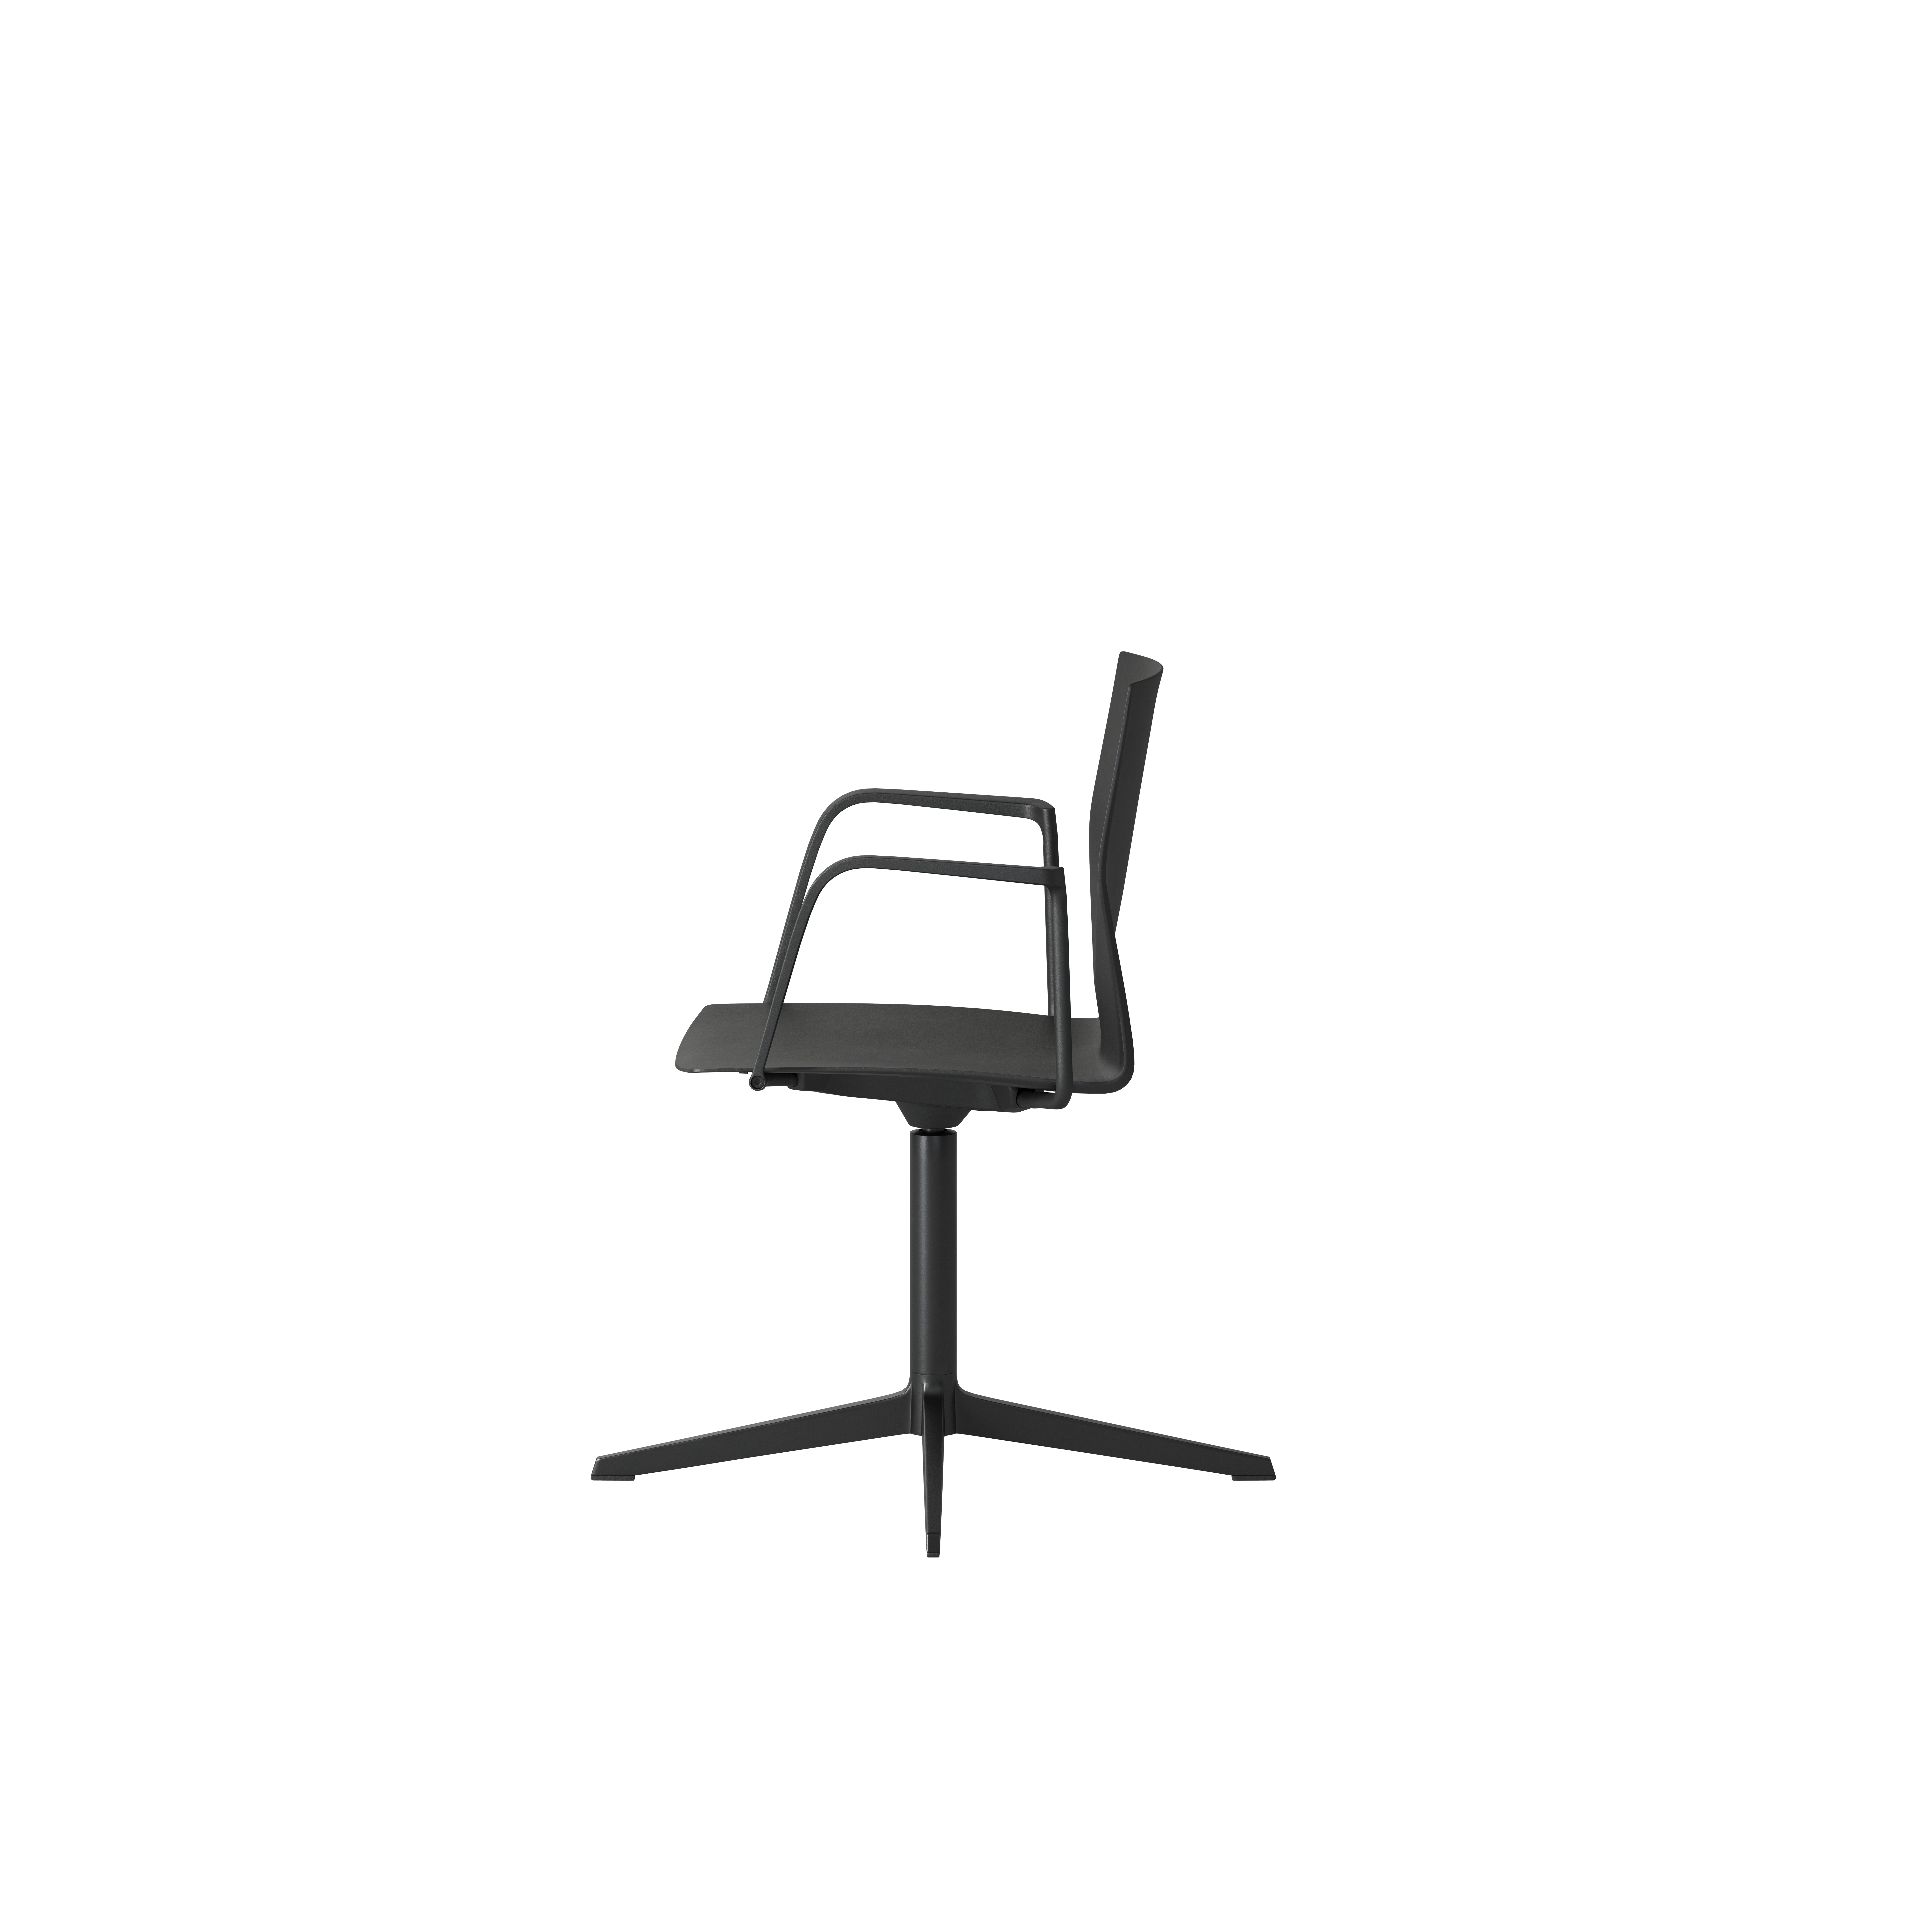 OCEE&FOUR – Chairs – FourCast 2 Evo – Plastic shell - Loop Armrest - Swivel - Packshot Image 1